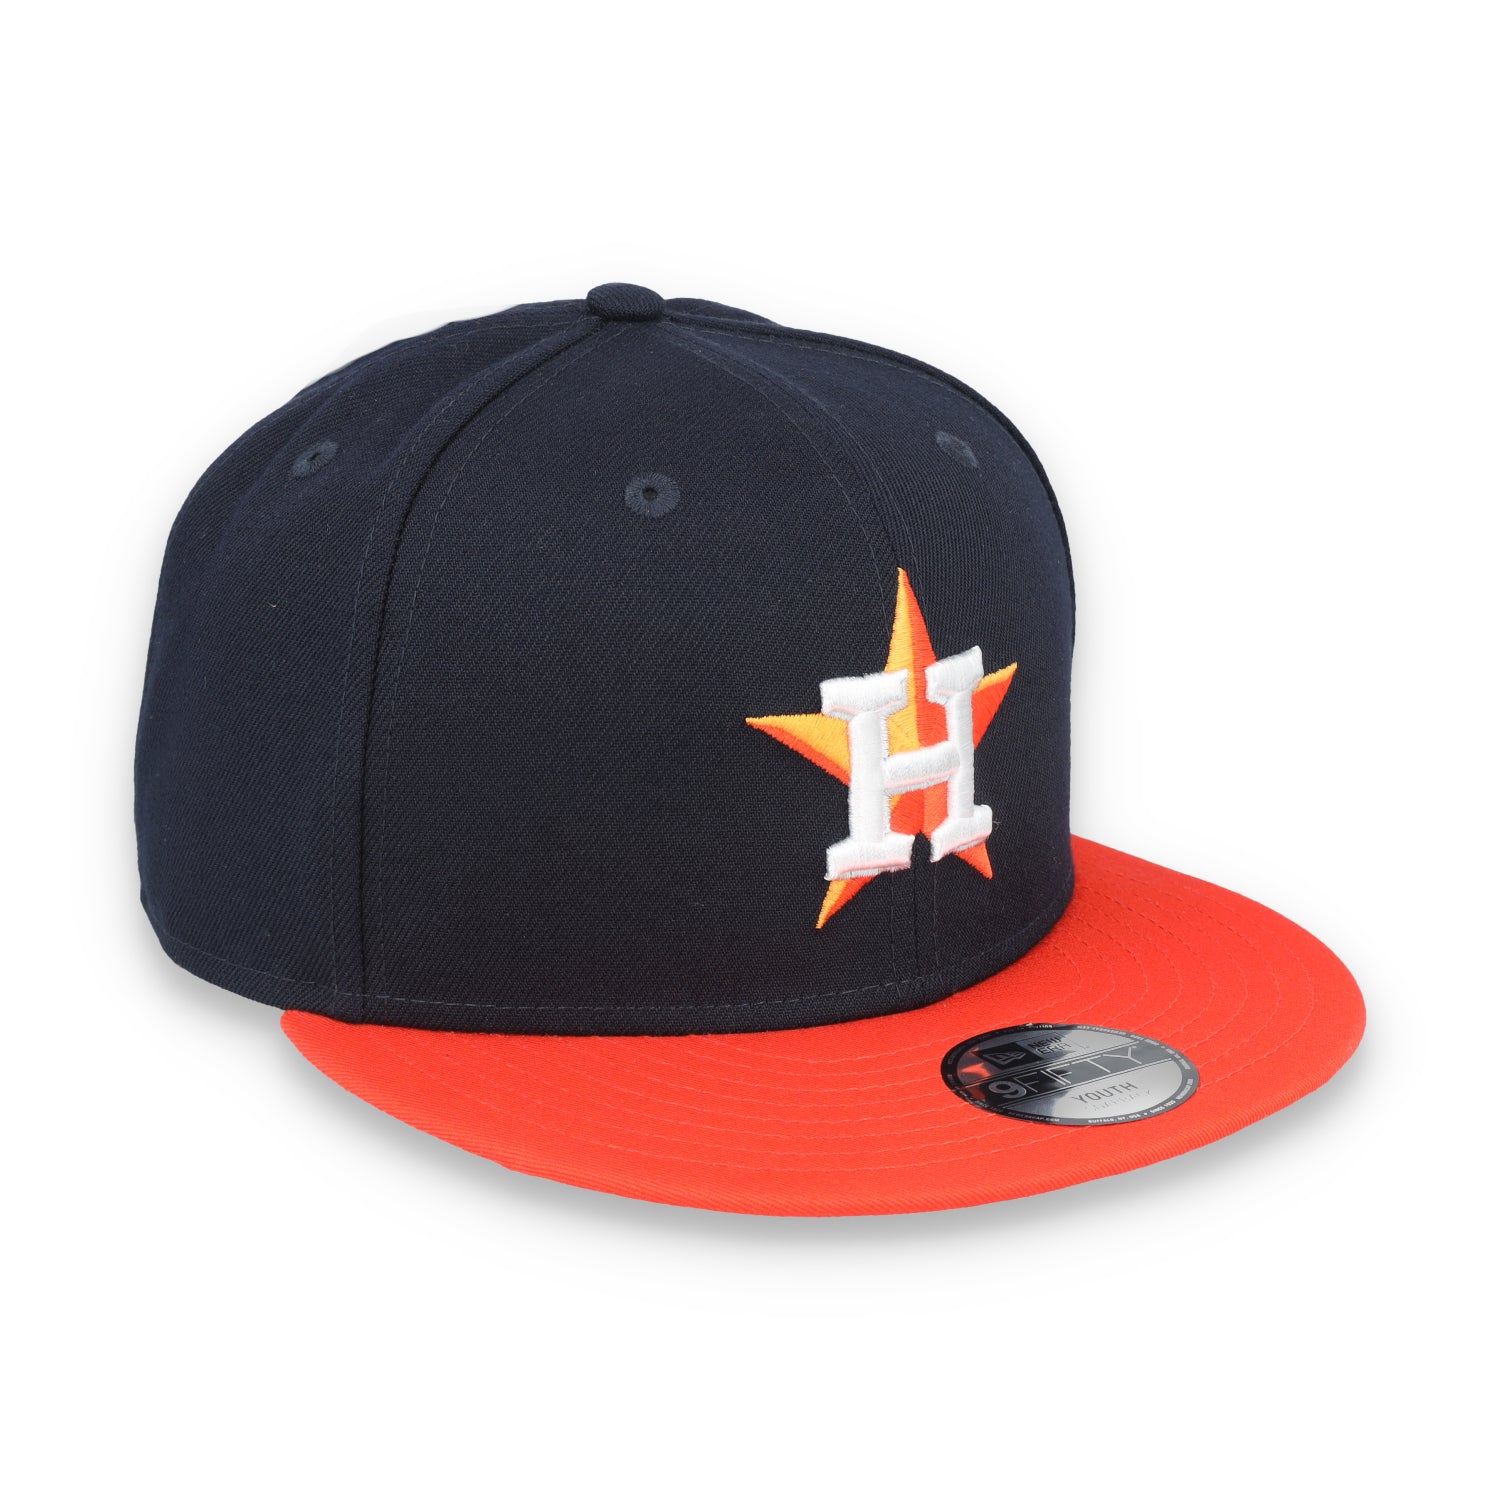 New Era Youth Houston Astros 9FIFTY Snapback Hat